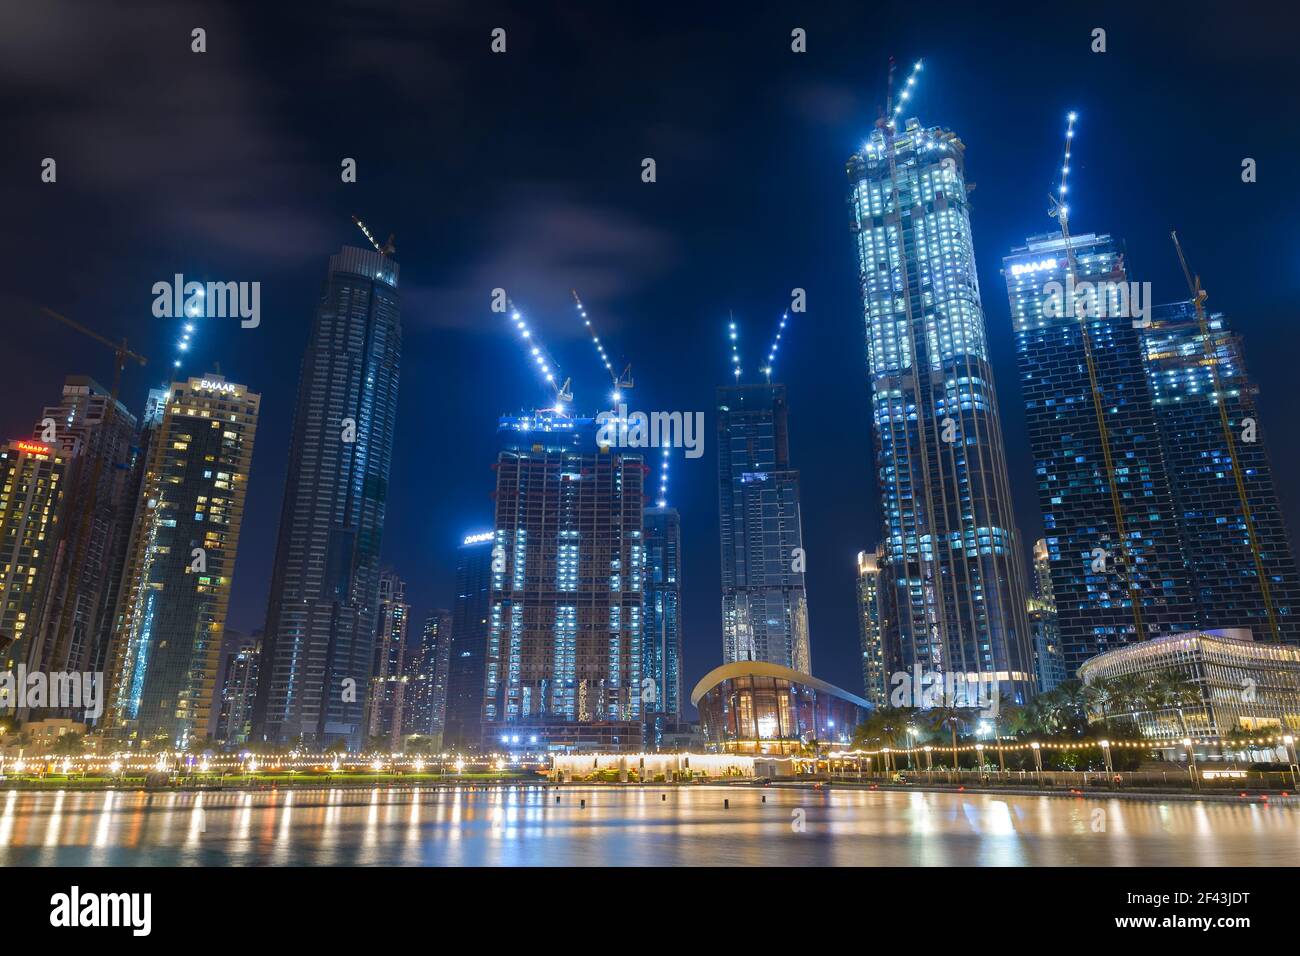 Multiple buildings with cranes at night near Dubai Mall in United Arab Emirates. Buildin construction cranes illuminated. Stock Photo